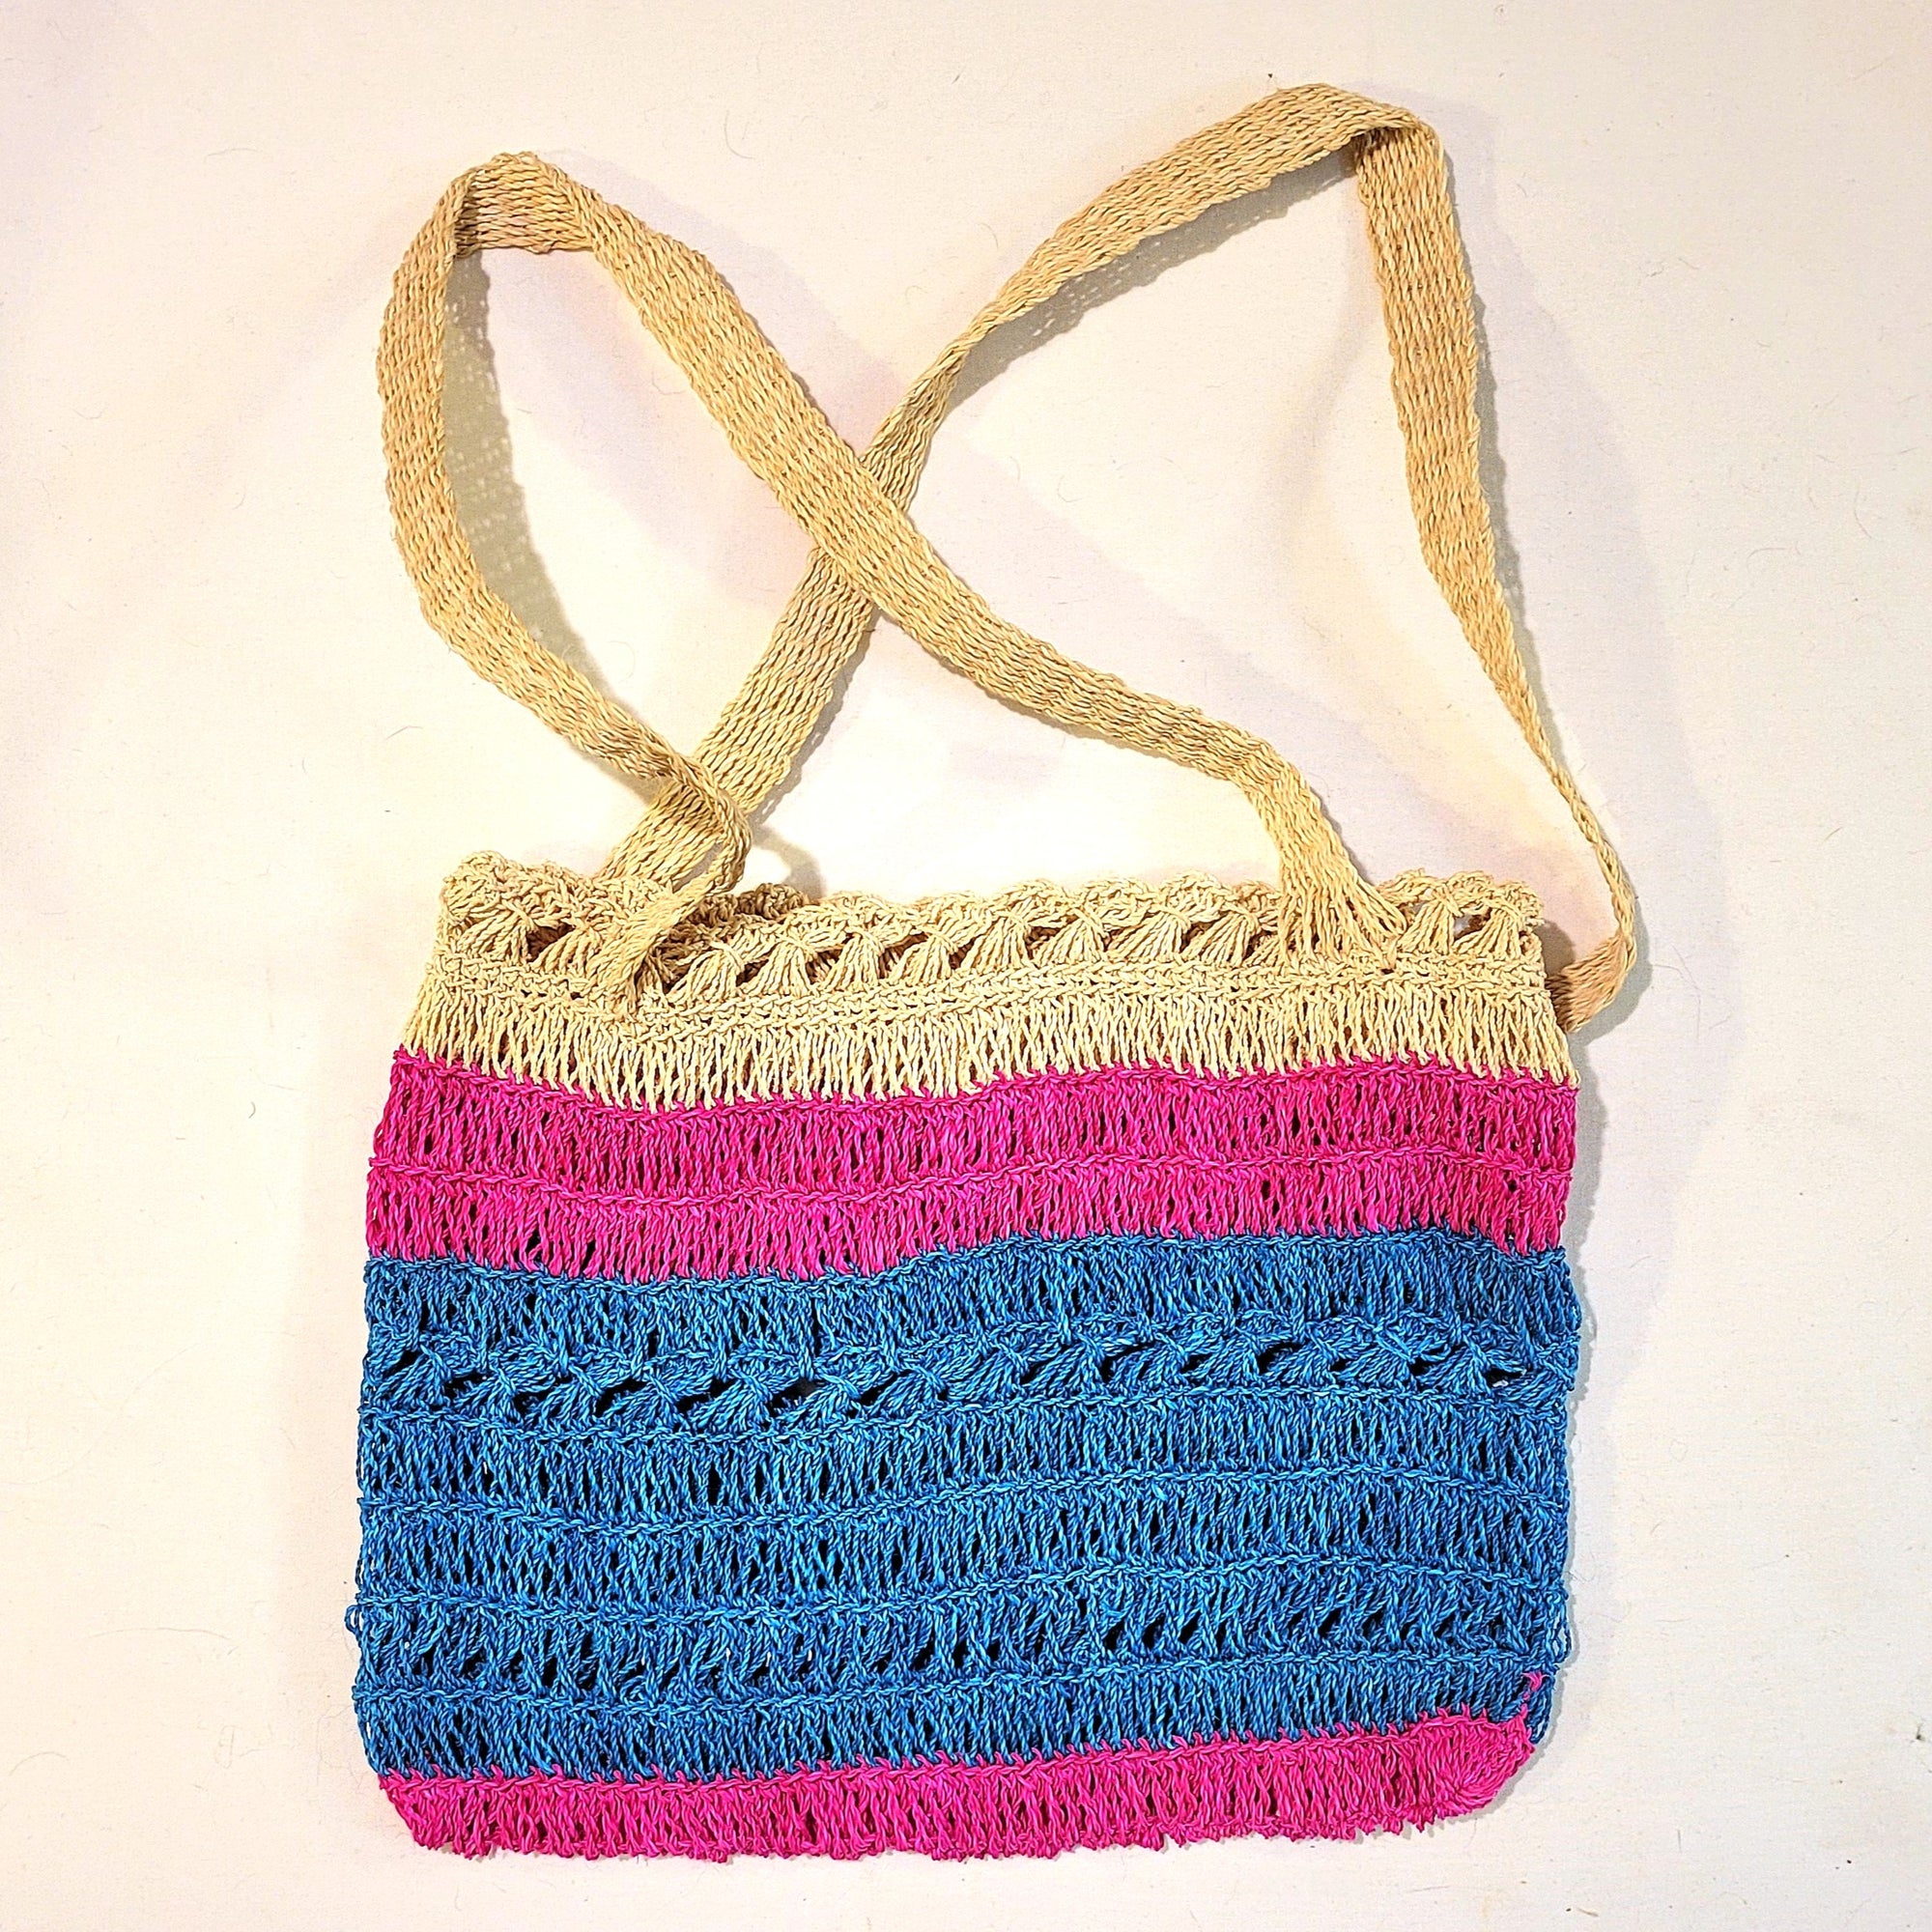 Fancy ivory, pink and turquoise crochet fair trade chambira market bag made by Peruvian Amazon artisan